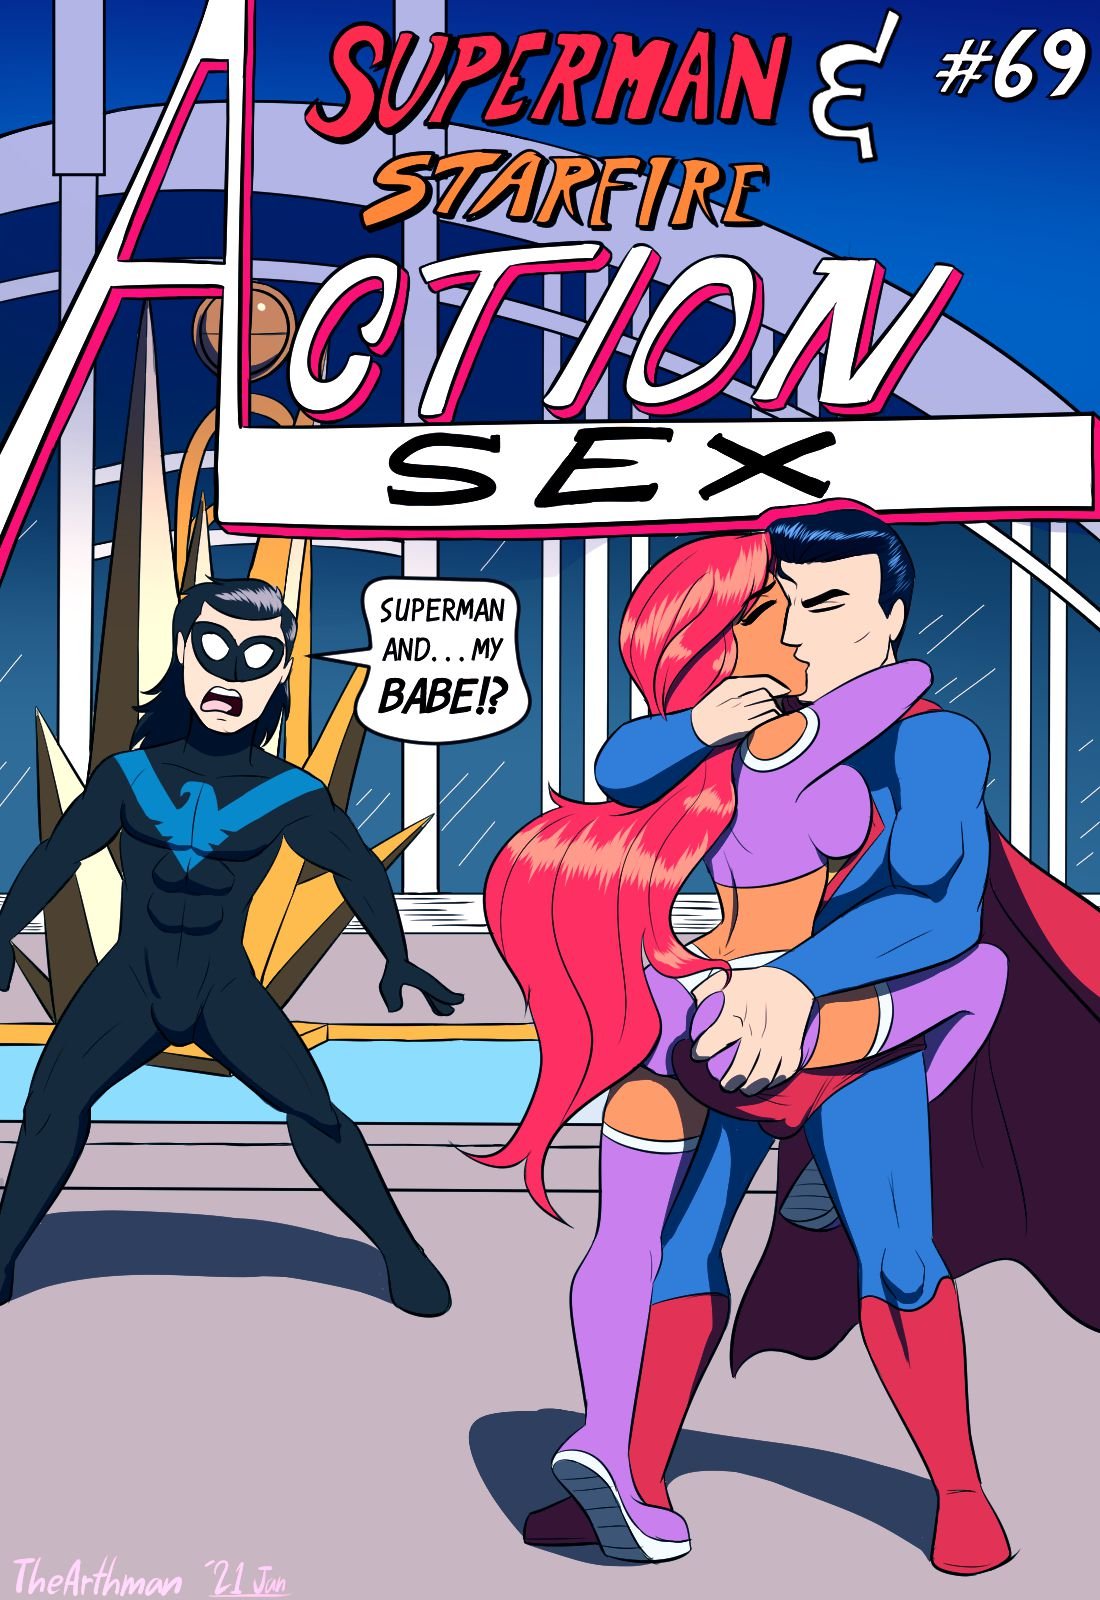 Action Sex (Justice League) The Arthman - 1  photo